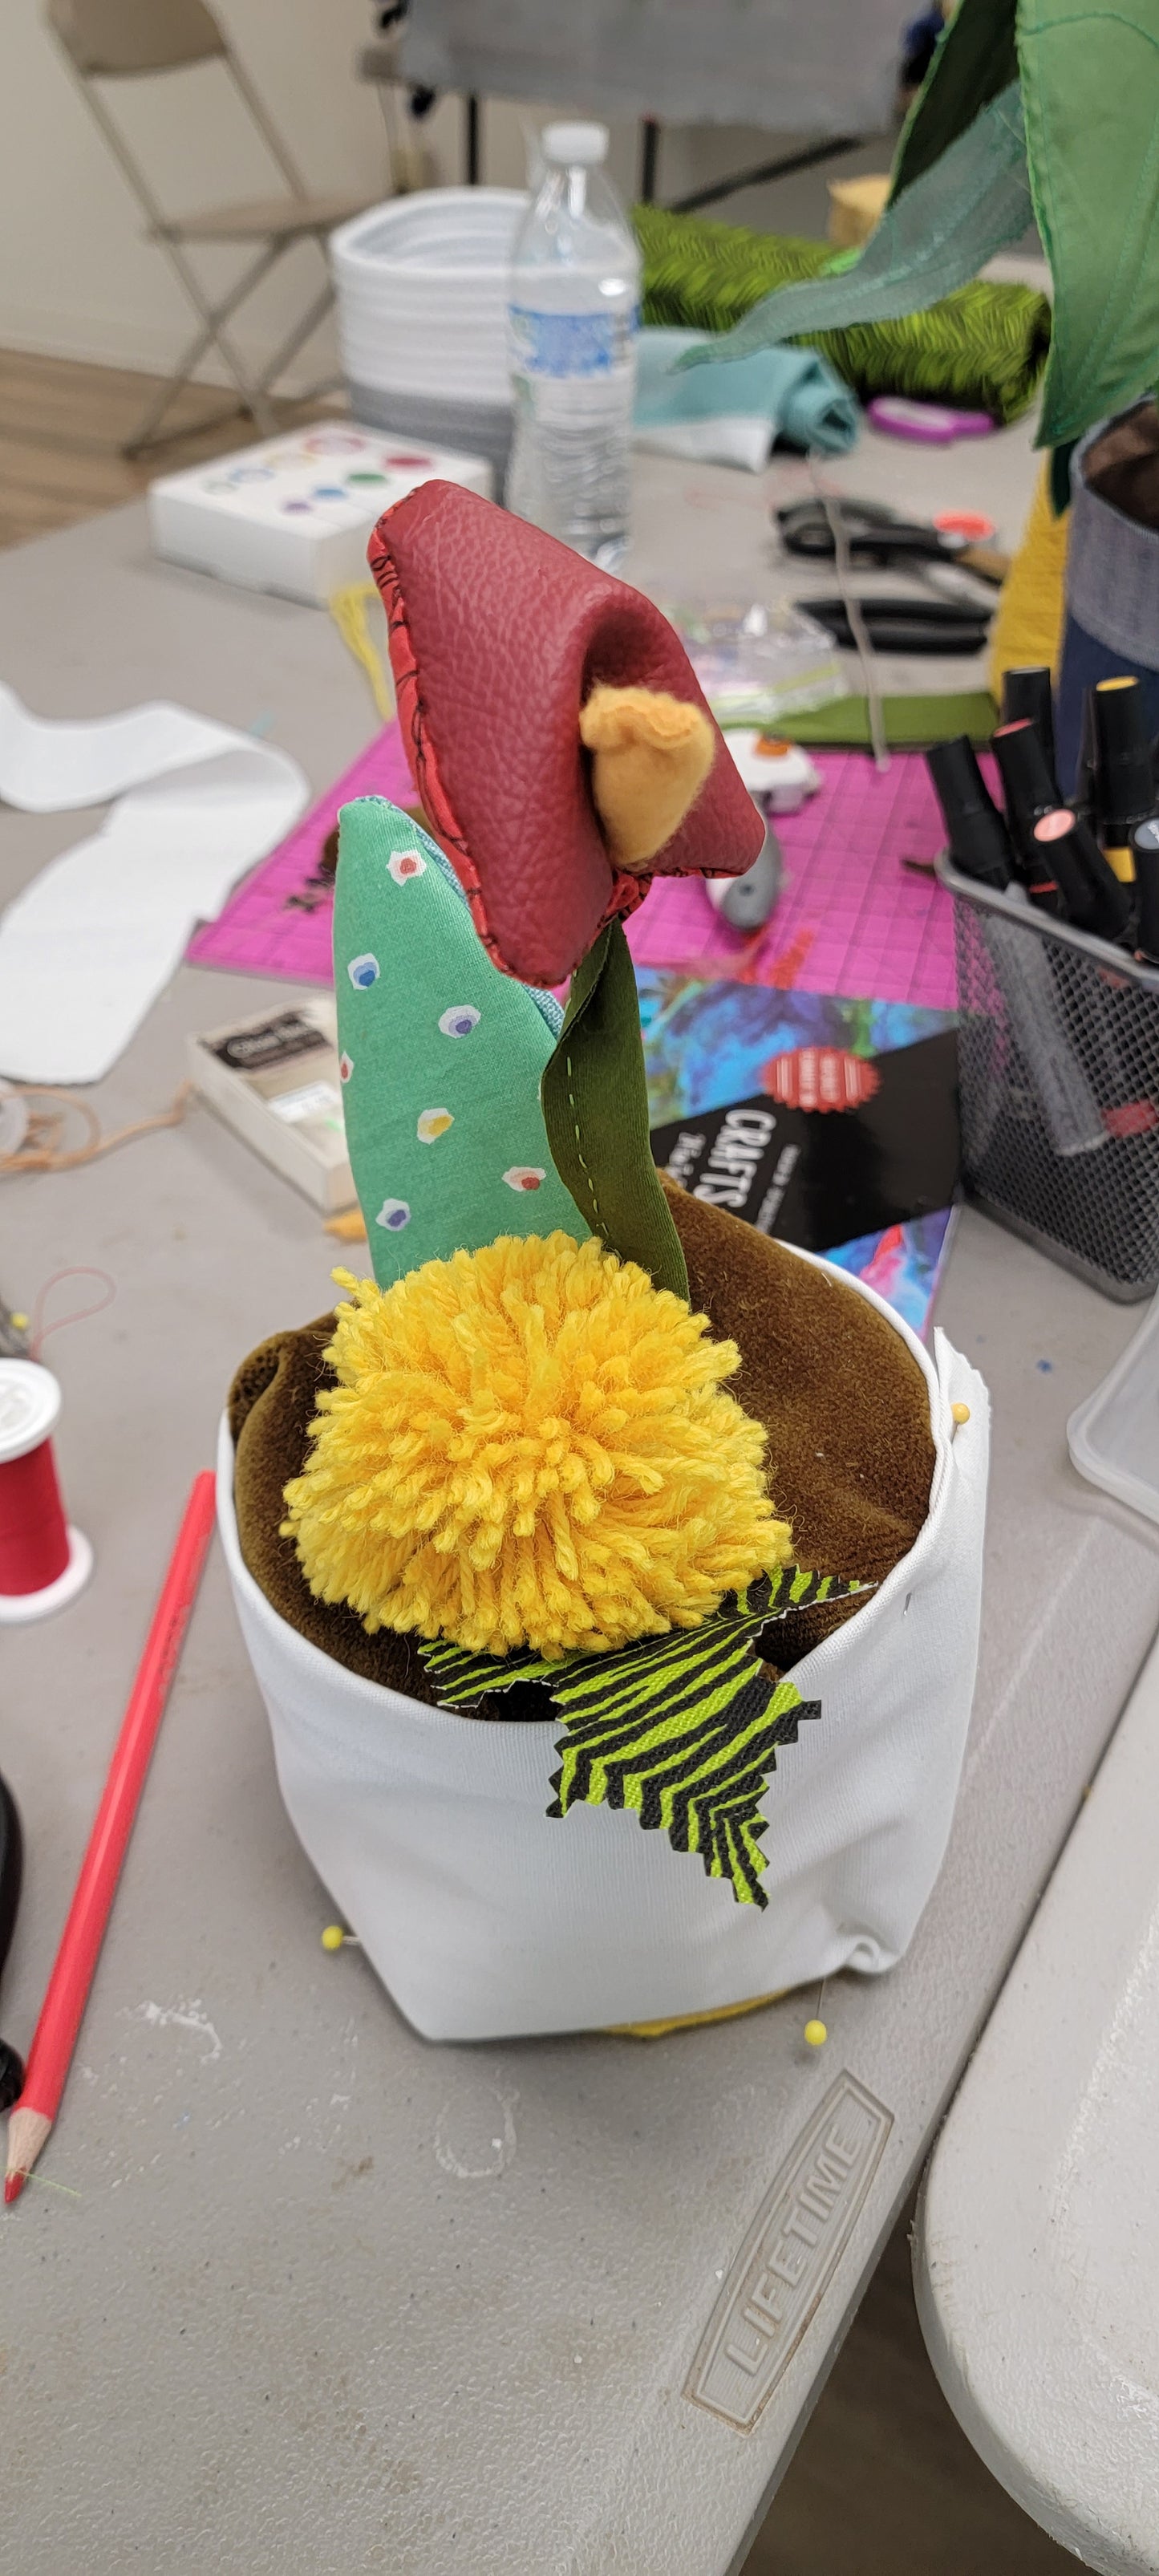 Community Workshop: Make a Fabric Flower with Jasmine Best